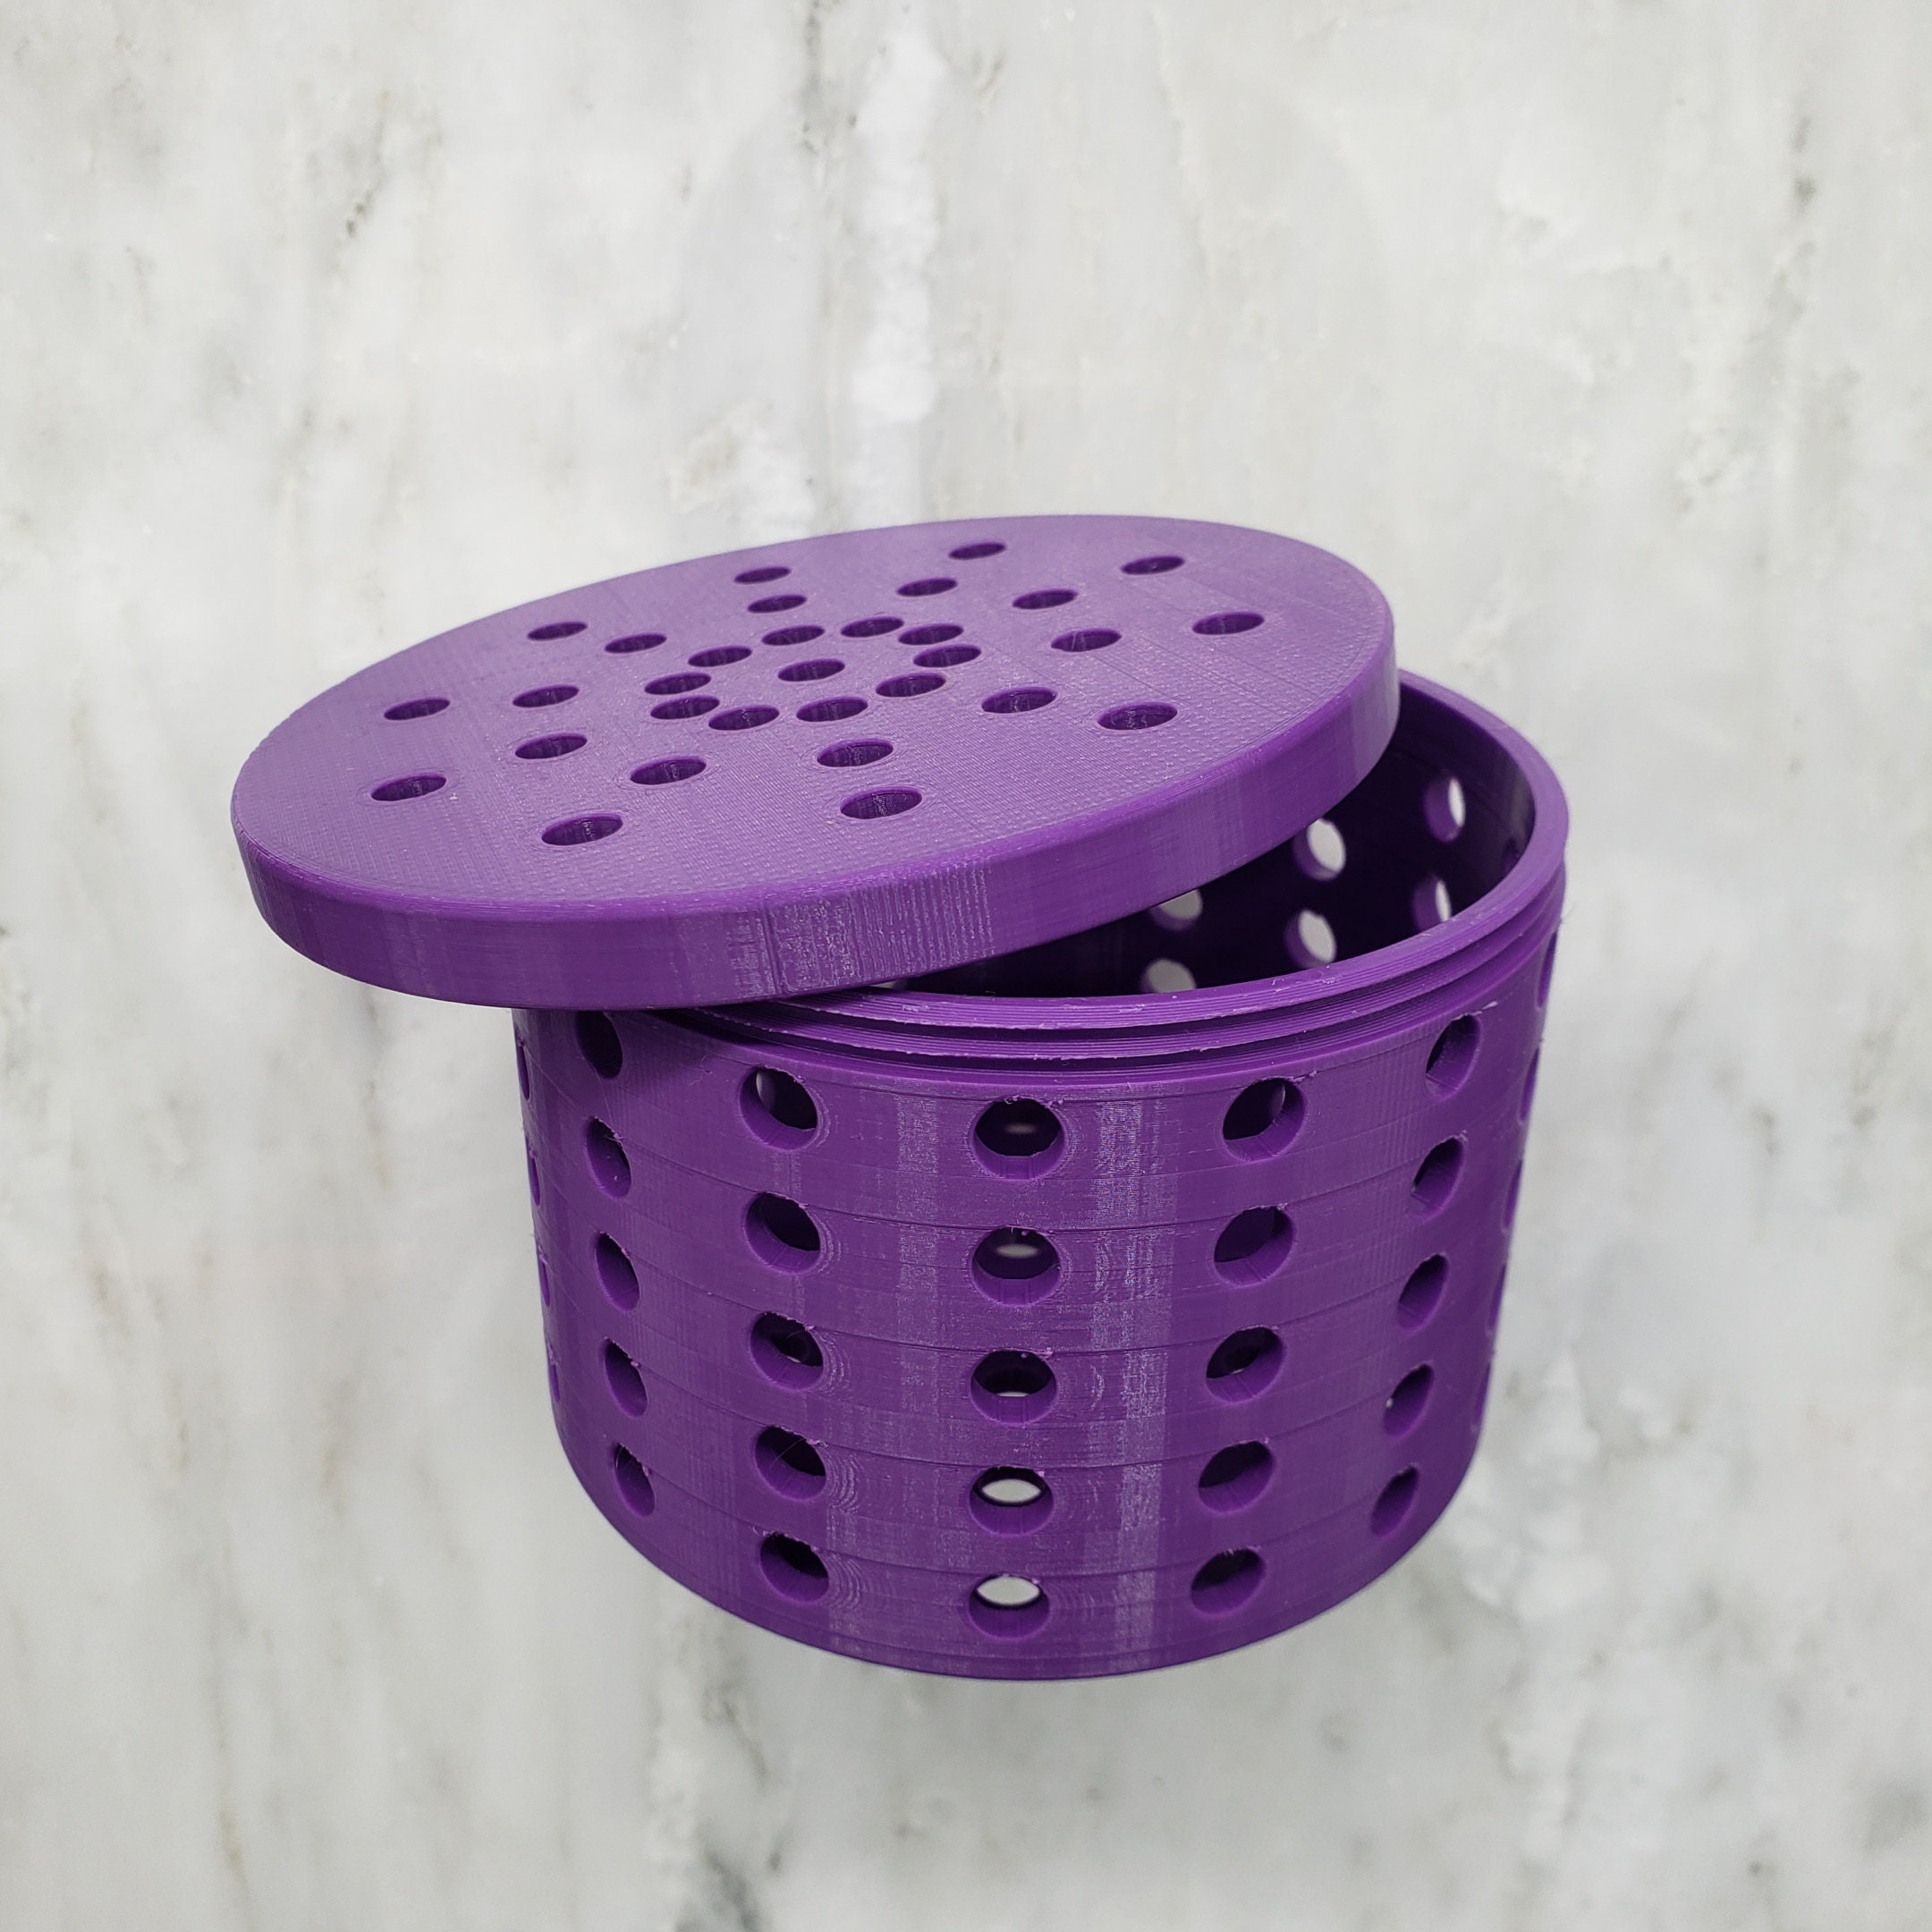 Large Shower Steamer Holder Basket With Suction Cup, Shower